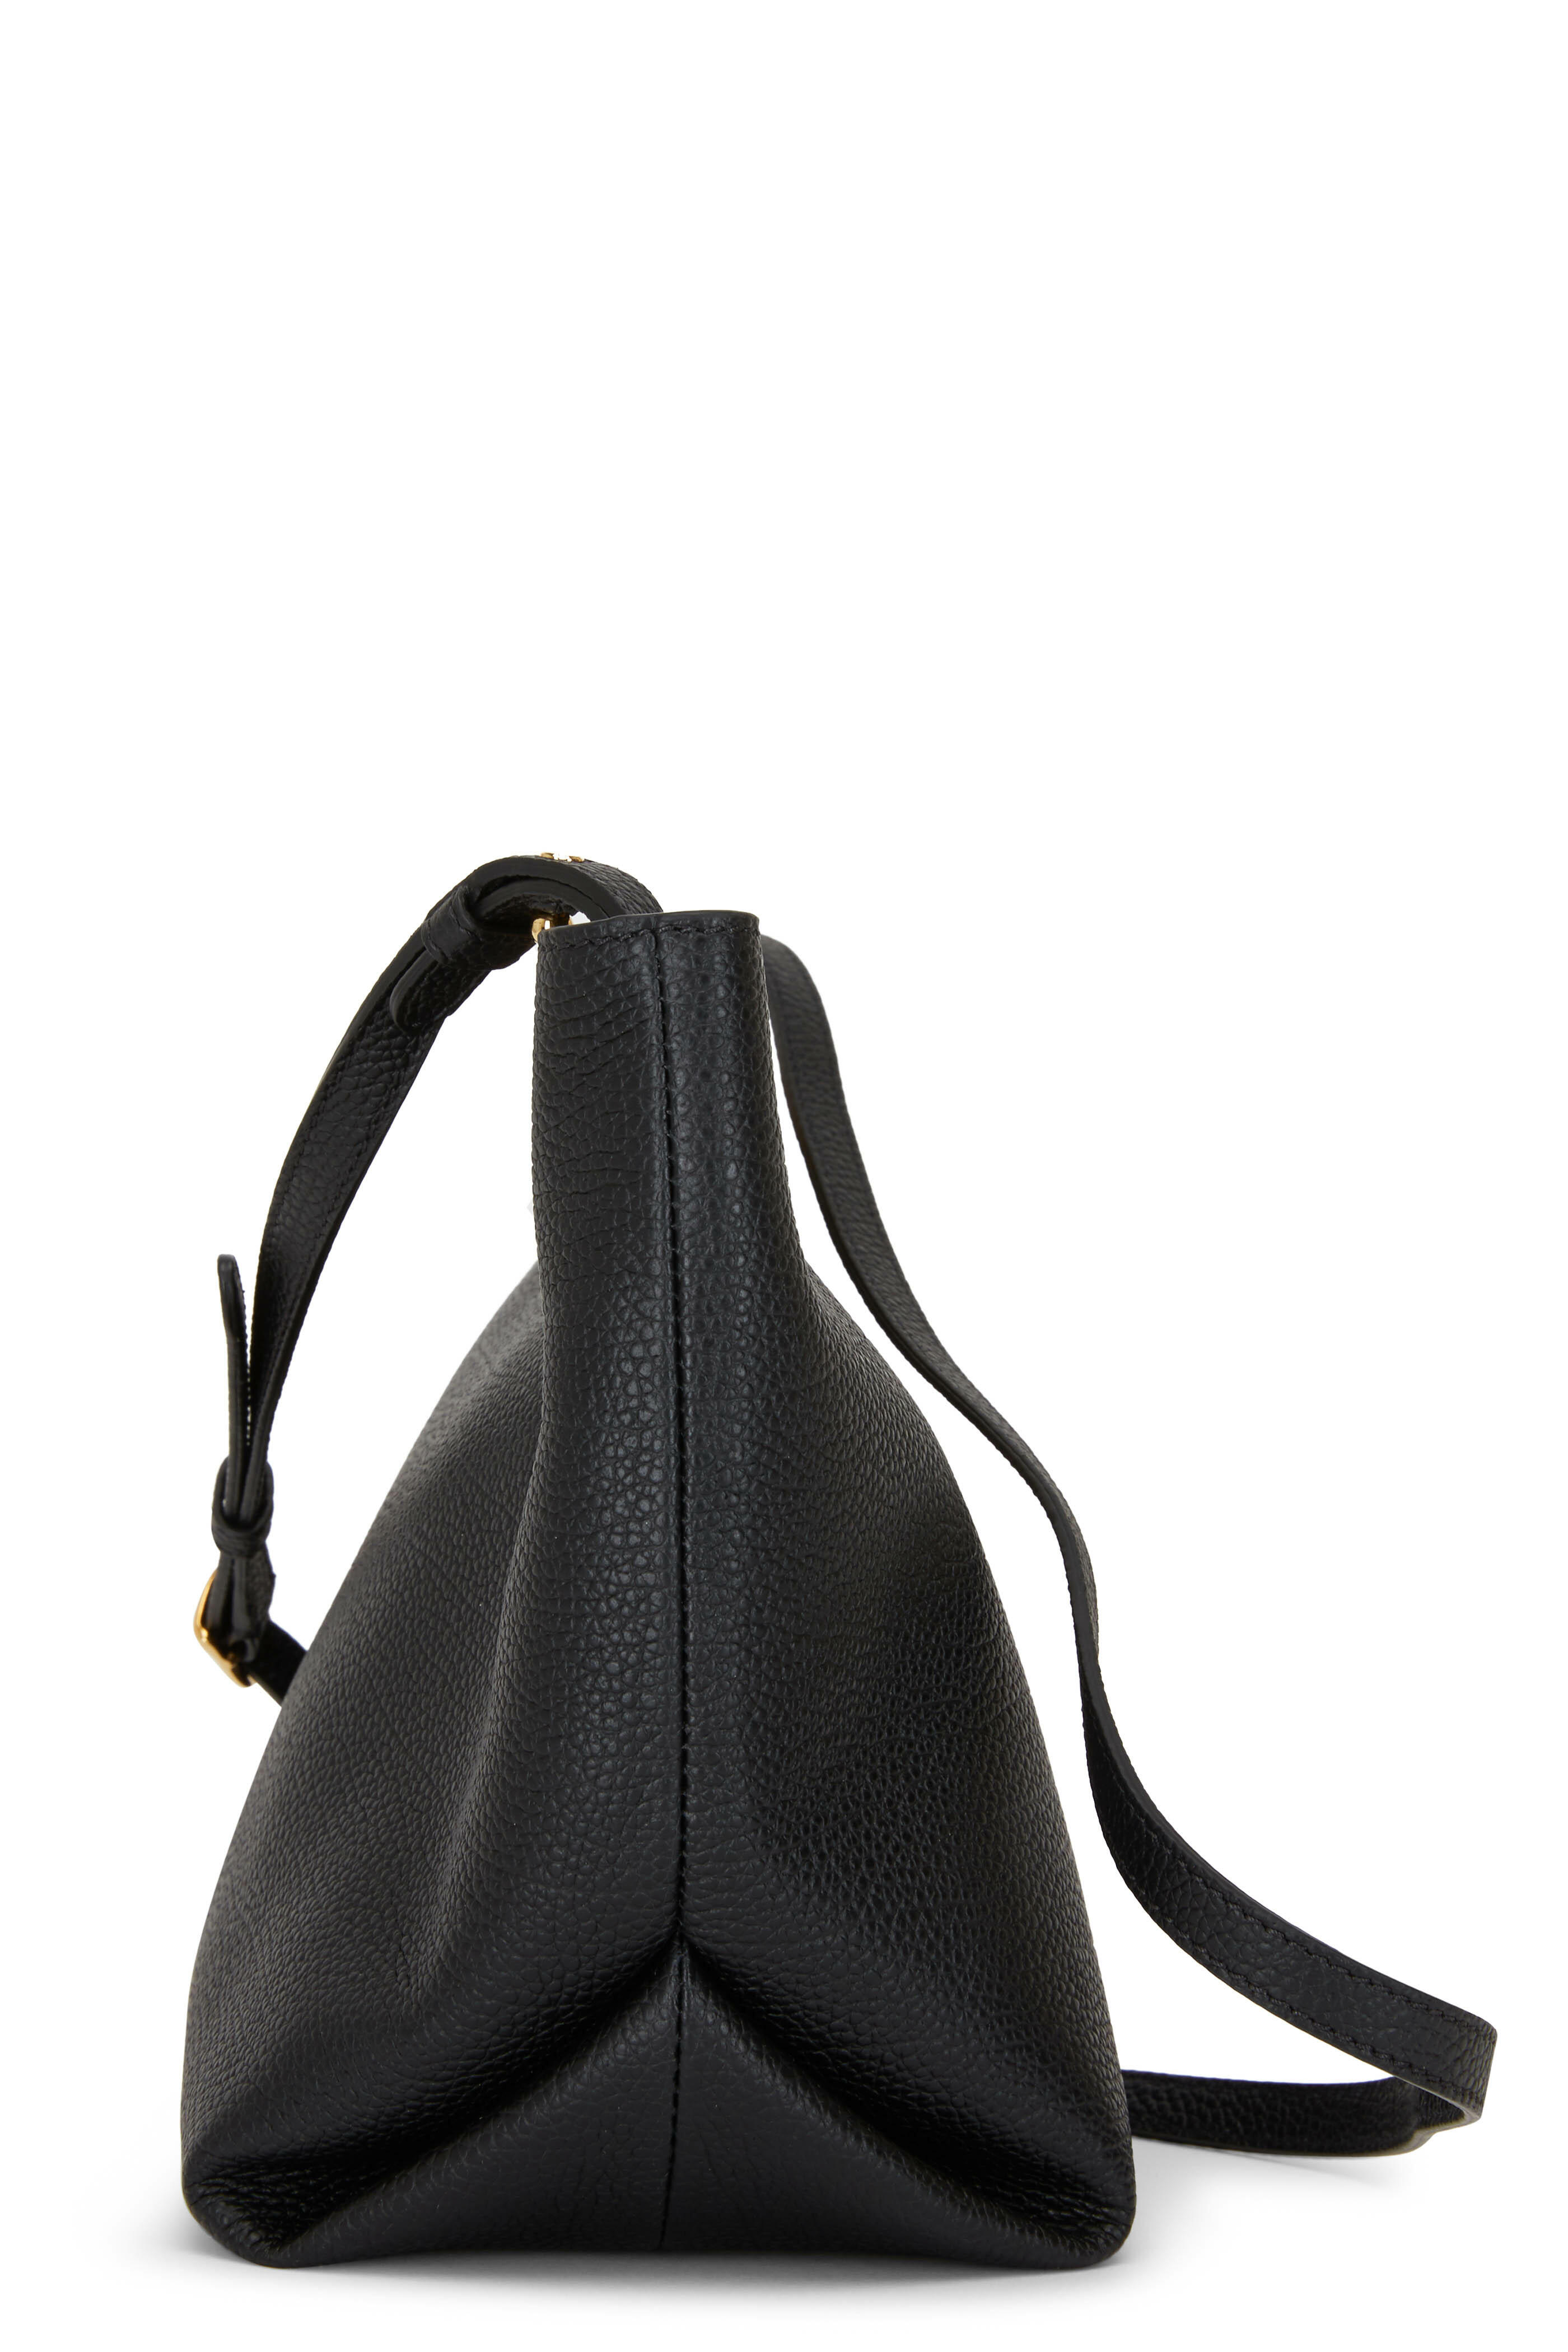 BOTTEGA VENETA: Loop bag in brushed leather - Black